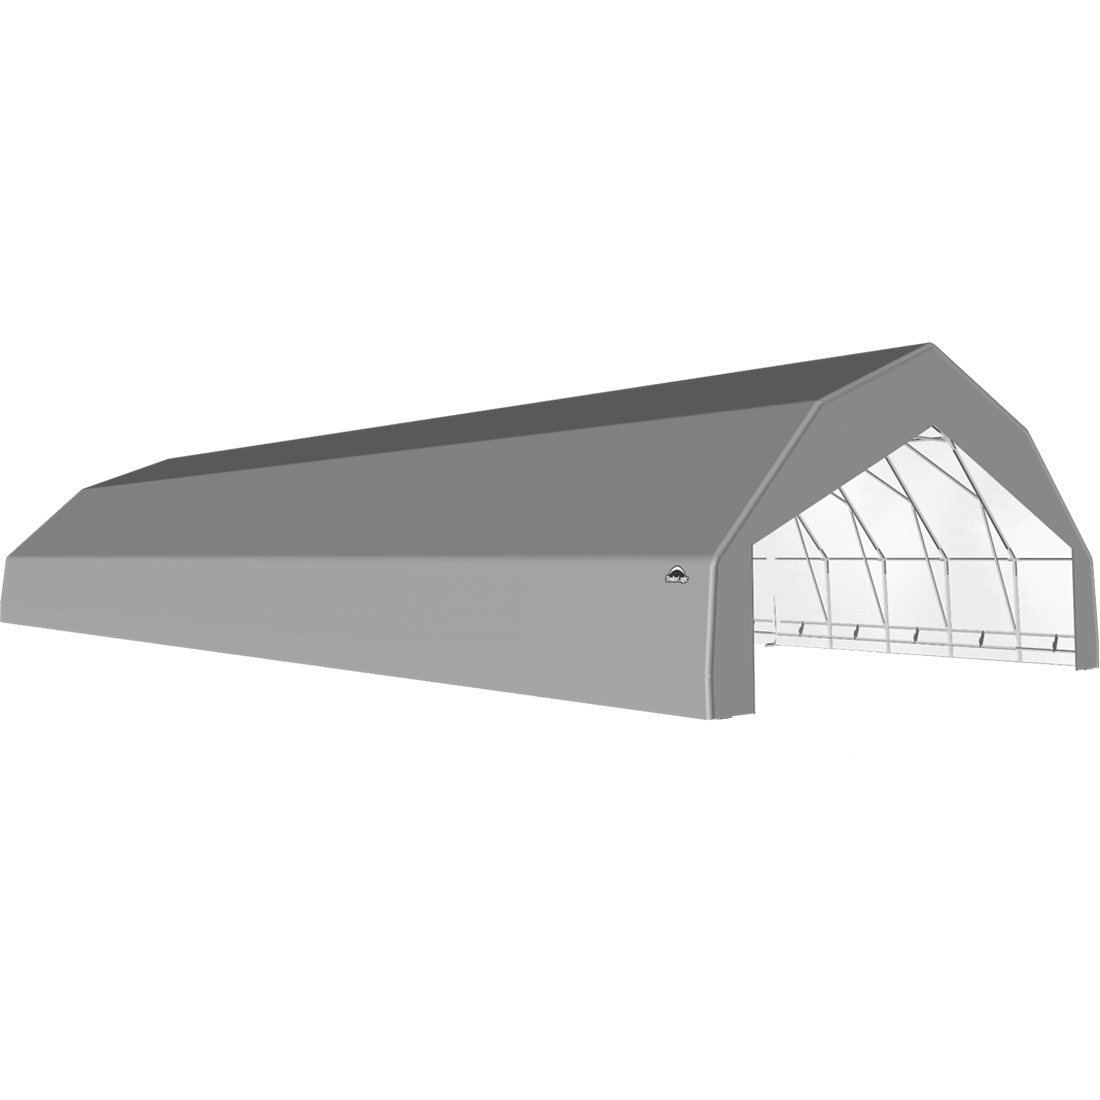 ShelterTech SP Series Barn Shelter, 30 ft. x 80 ft. x 15 ft. Heavy Duty PVC 14.5 oz. Gray